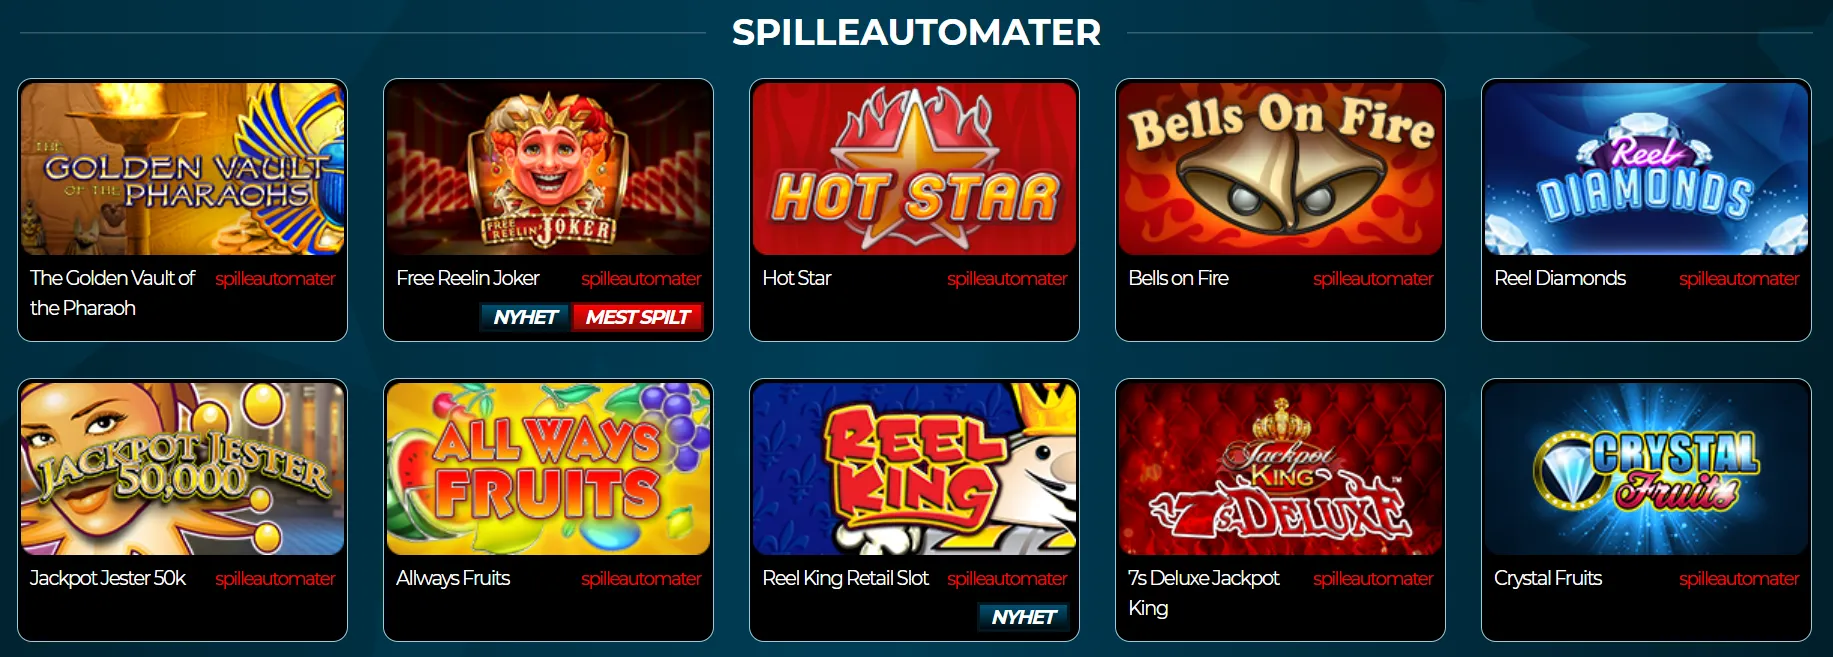 Spillutvalg spilleautomater casino norge